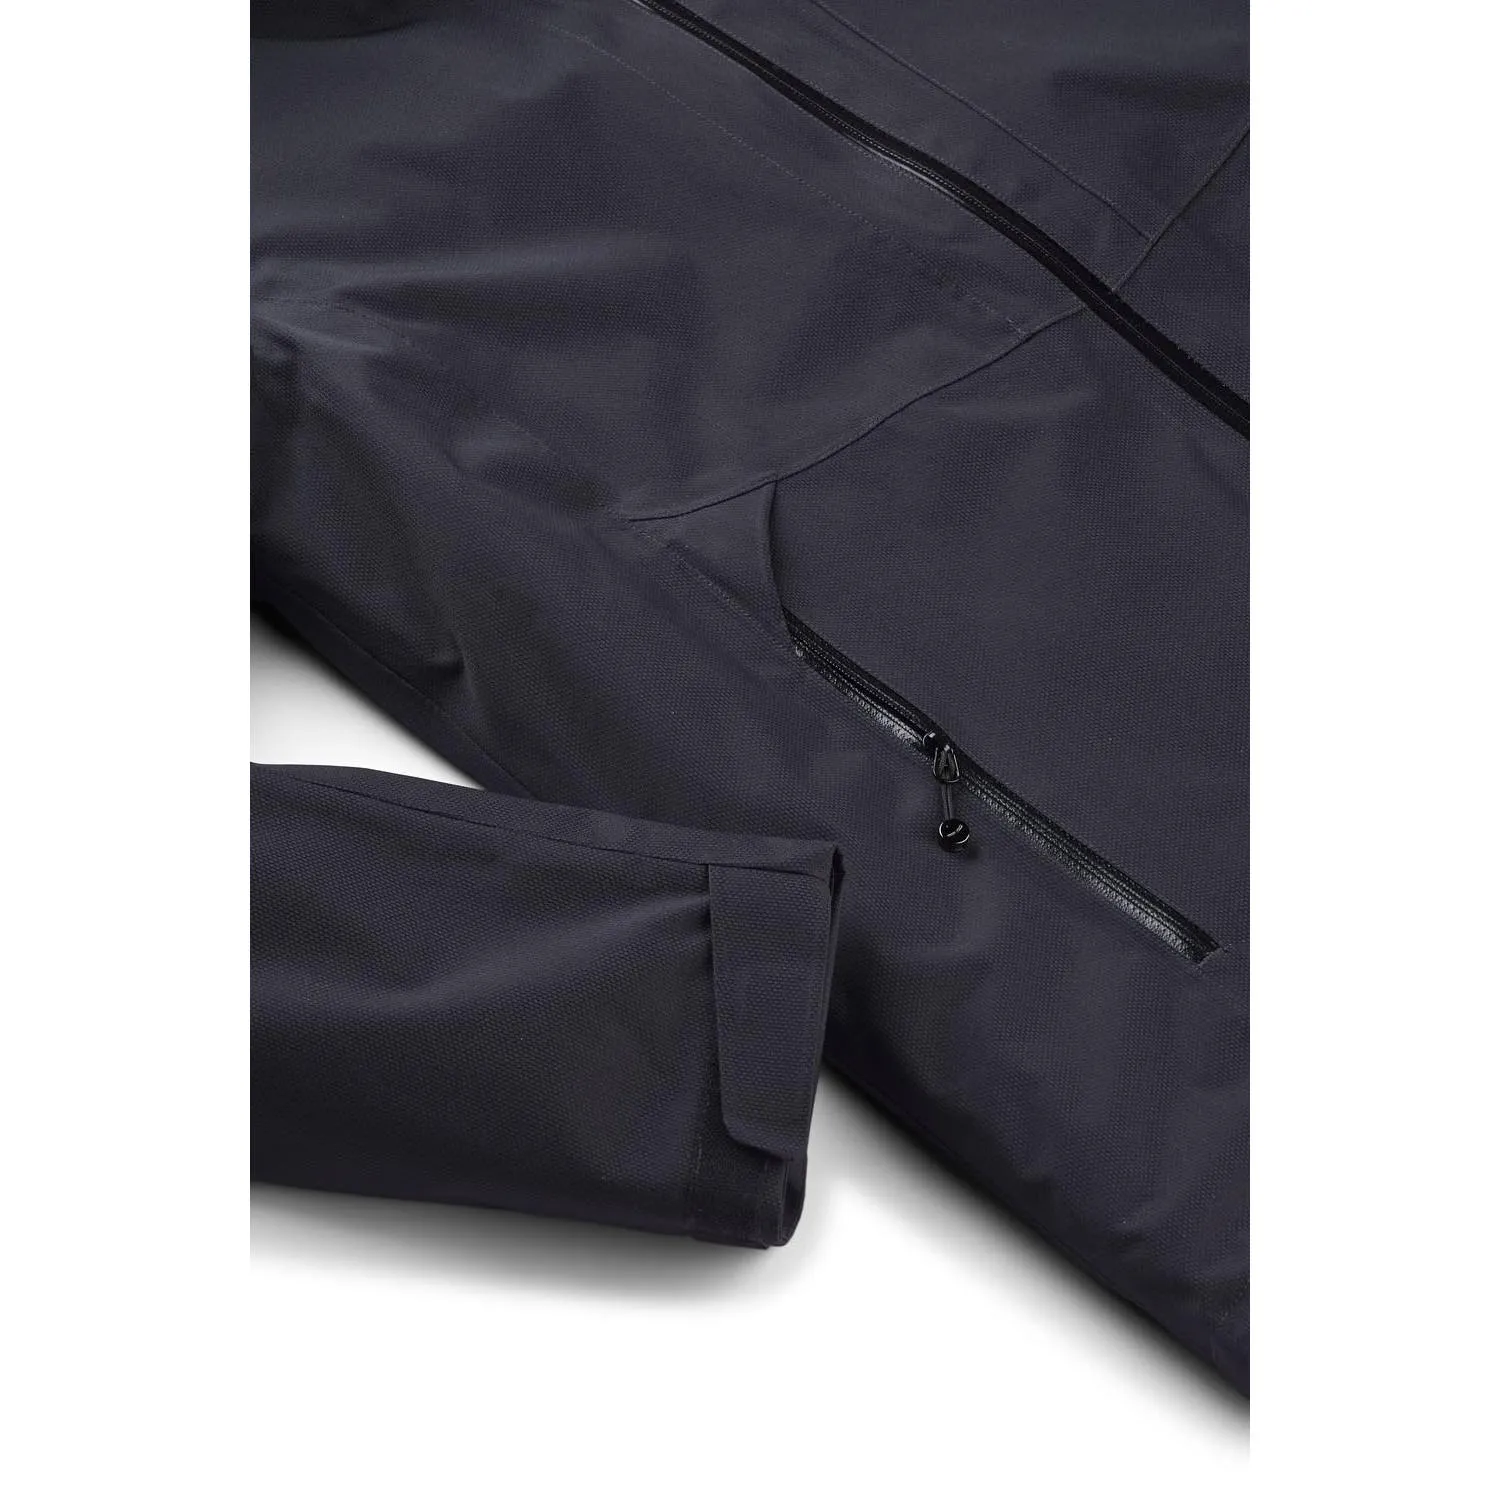 57_Nao-1059-3-in-1-jacket-for-men-Y-by-Nordisk-black-06.jpg